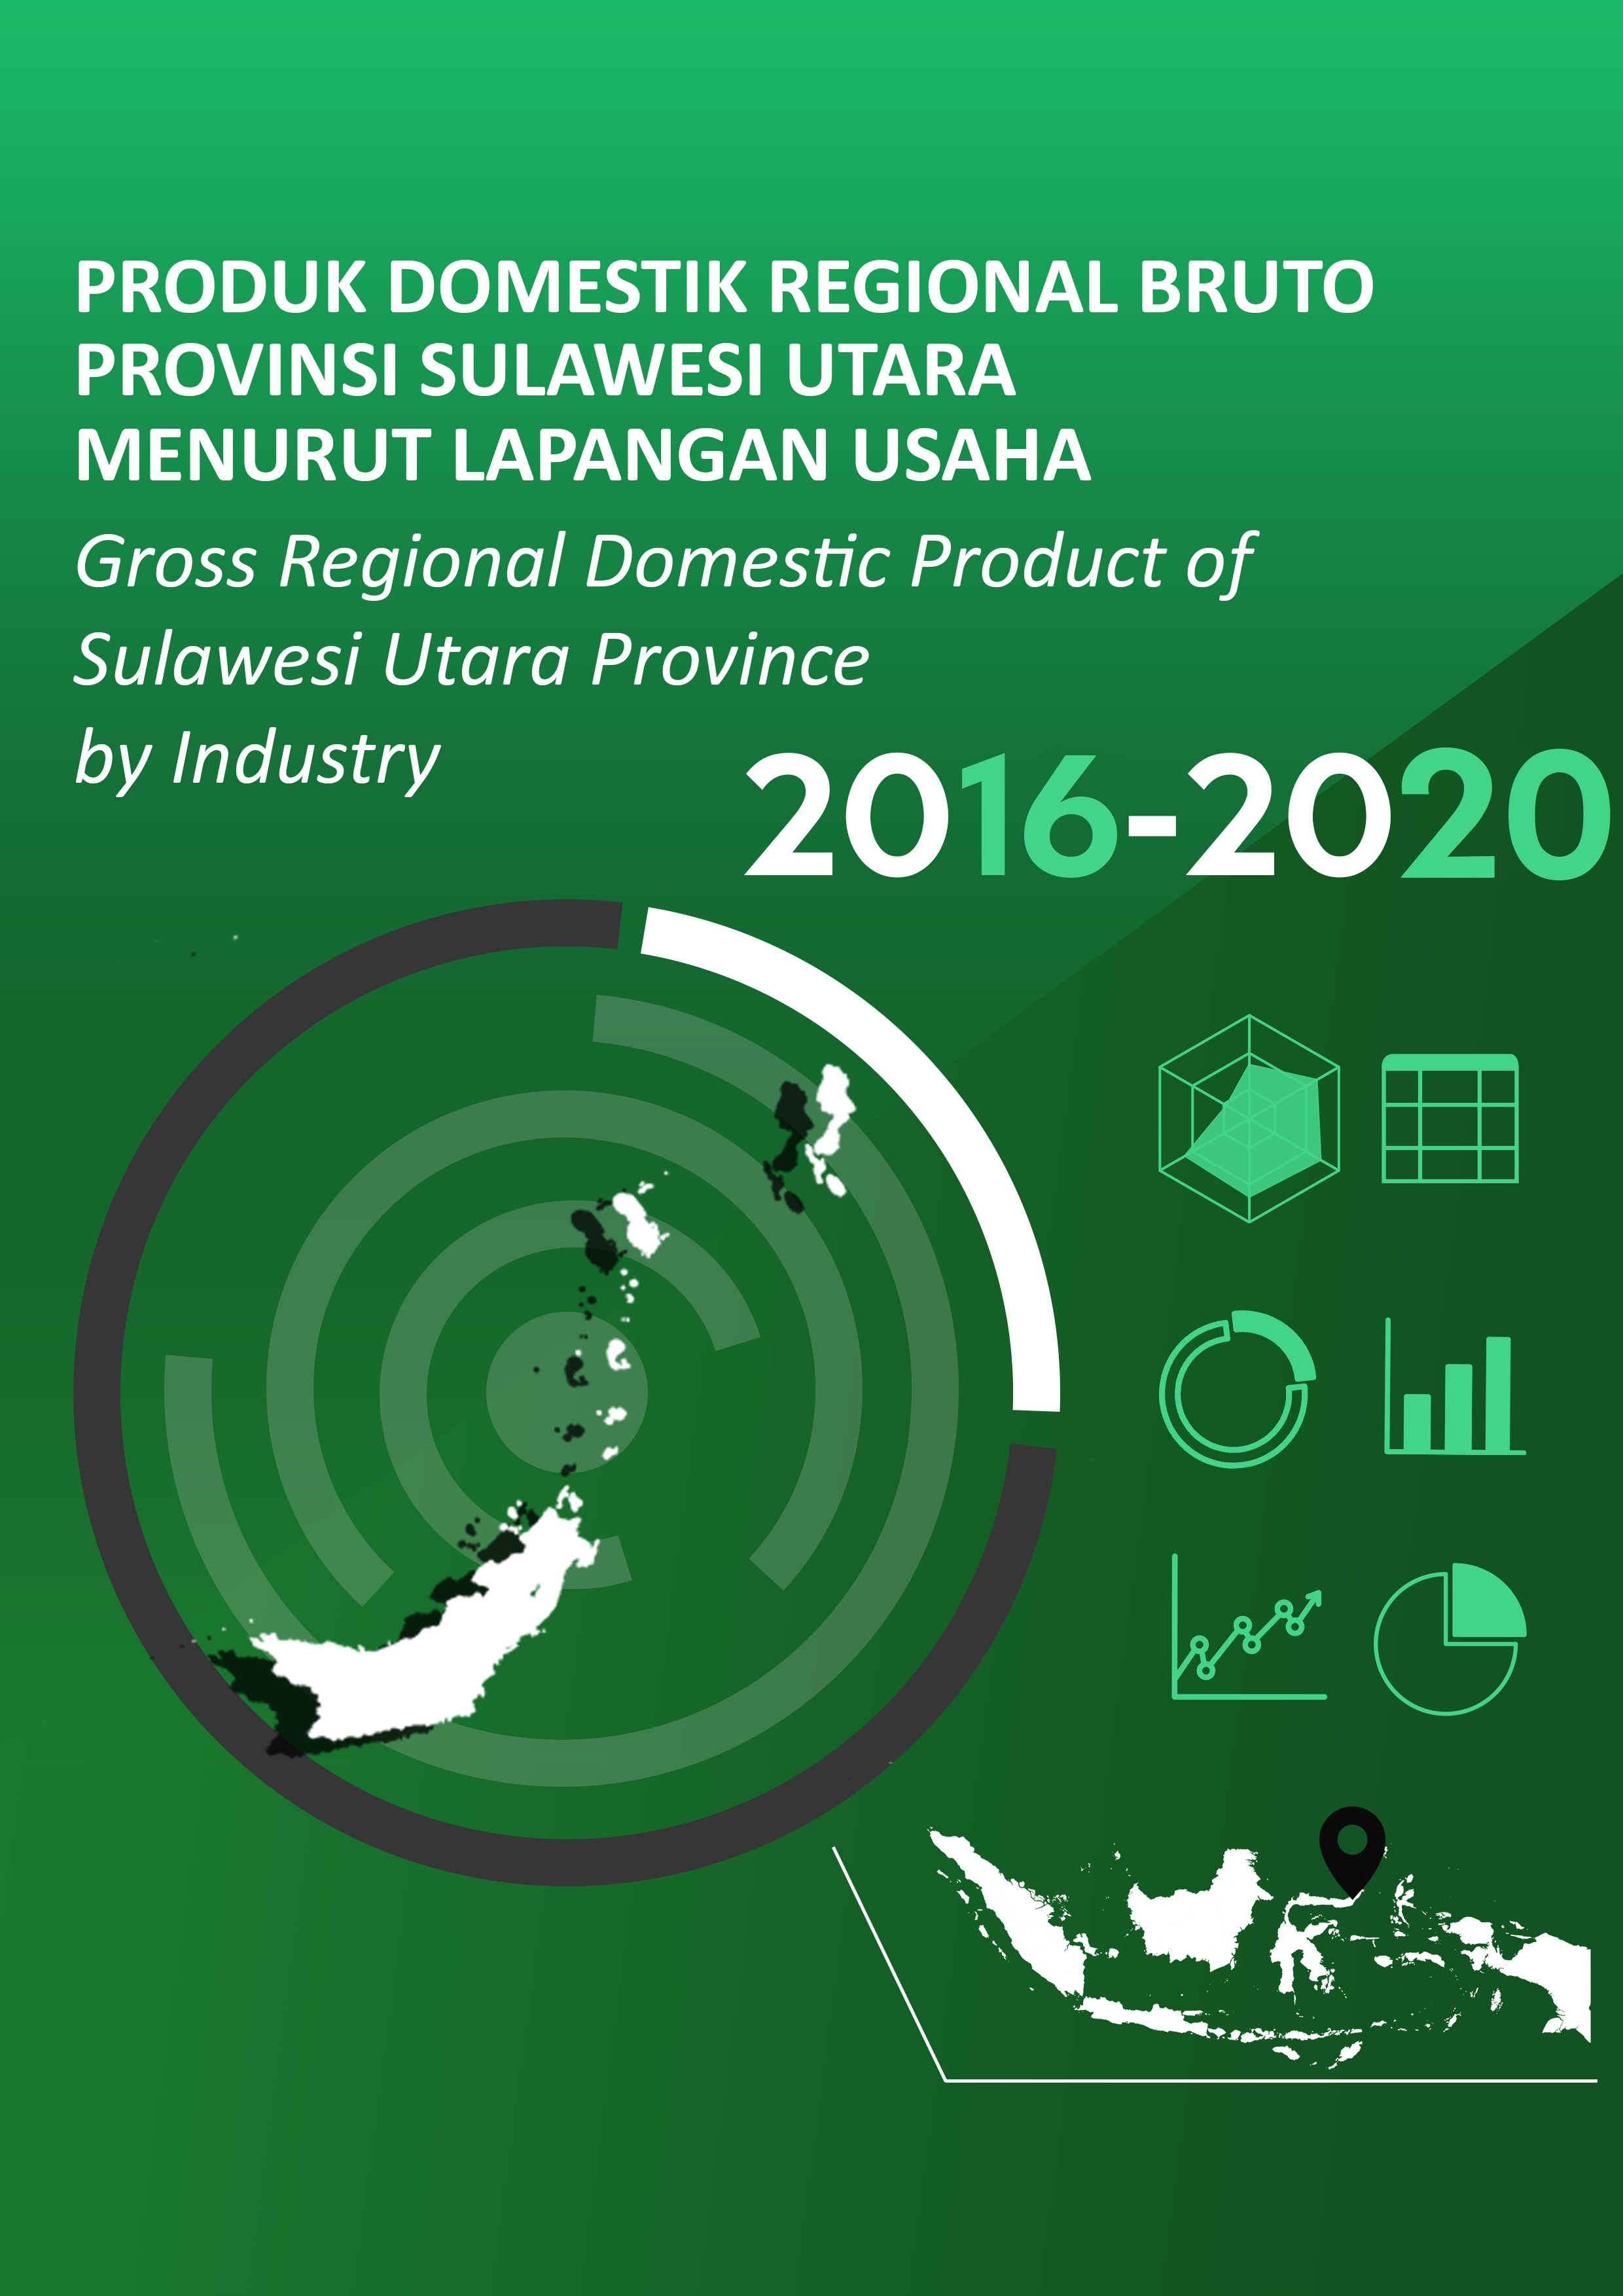 Produk Domestik Regional Bruto Provinsi Sulawesi Utara menurut Lapangan Usaha 2016-2020